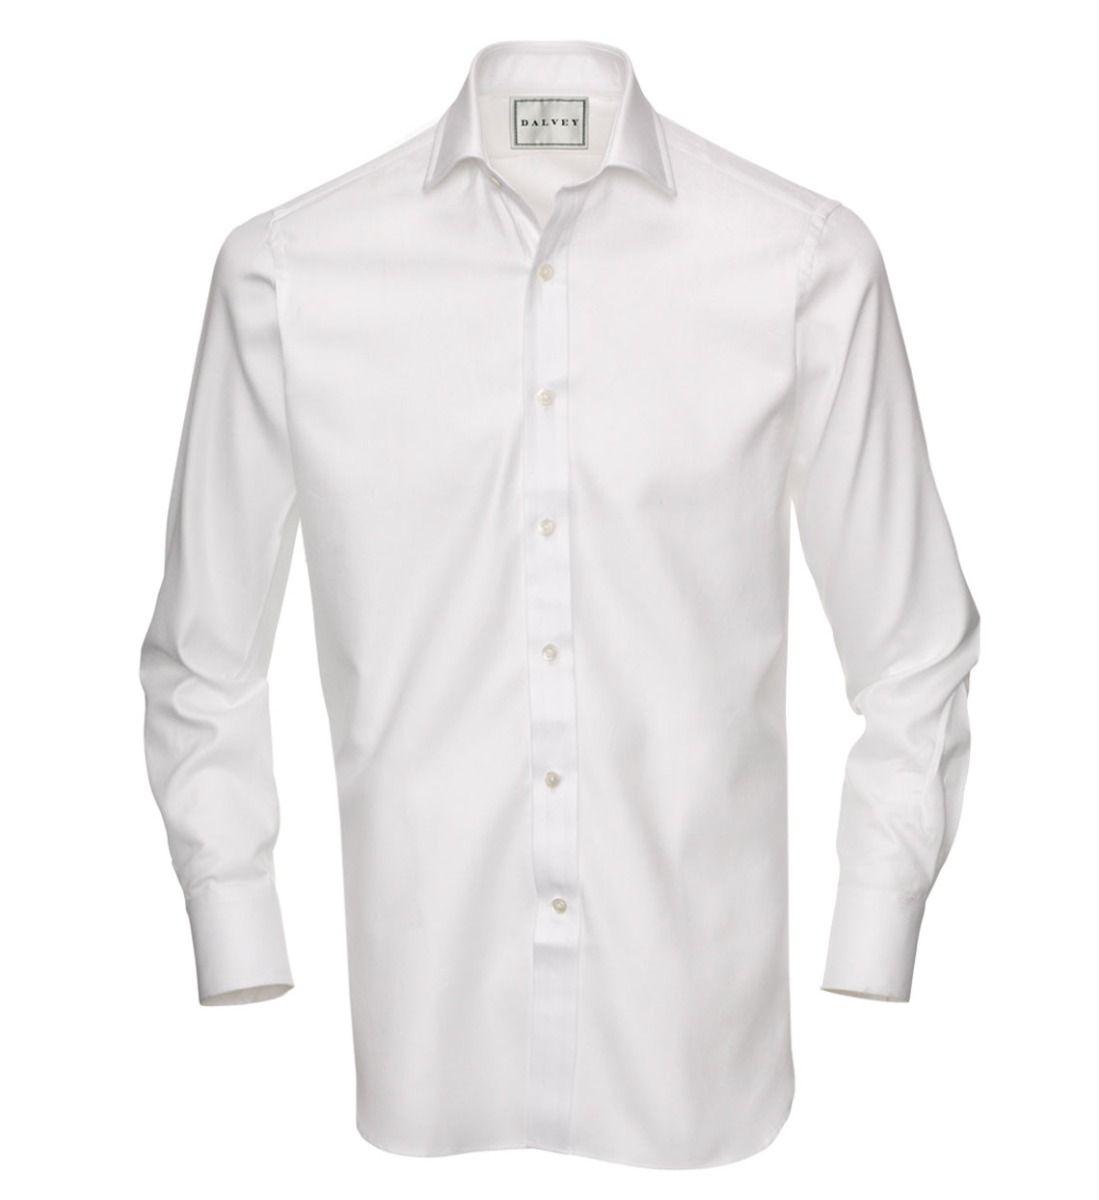 Shirt Button Cuff Solid White Twill - Dalvey